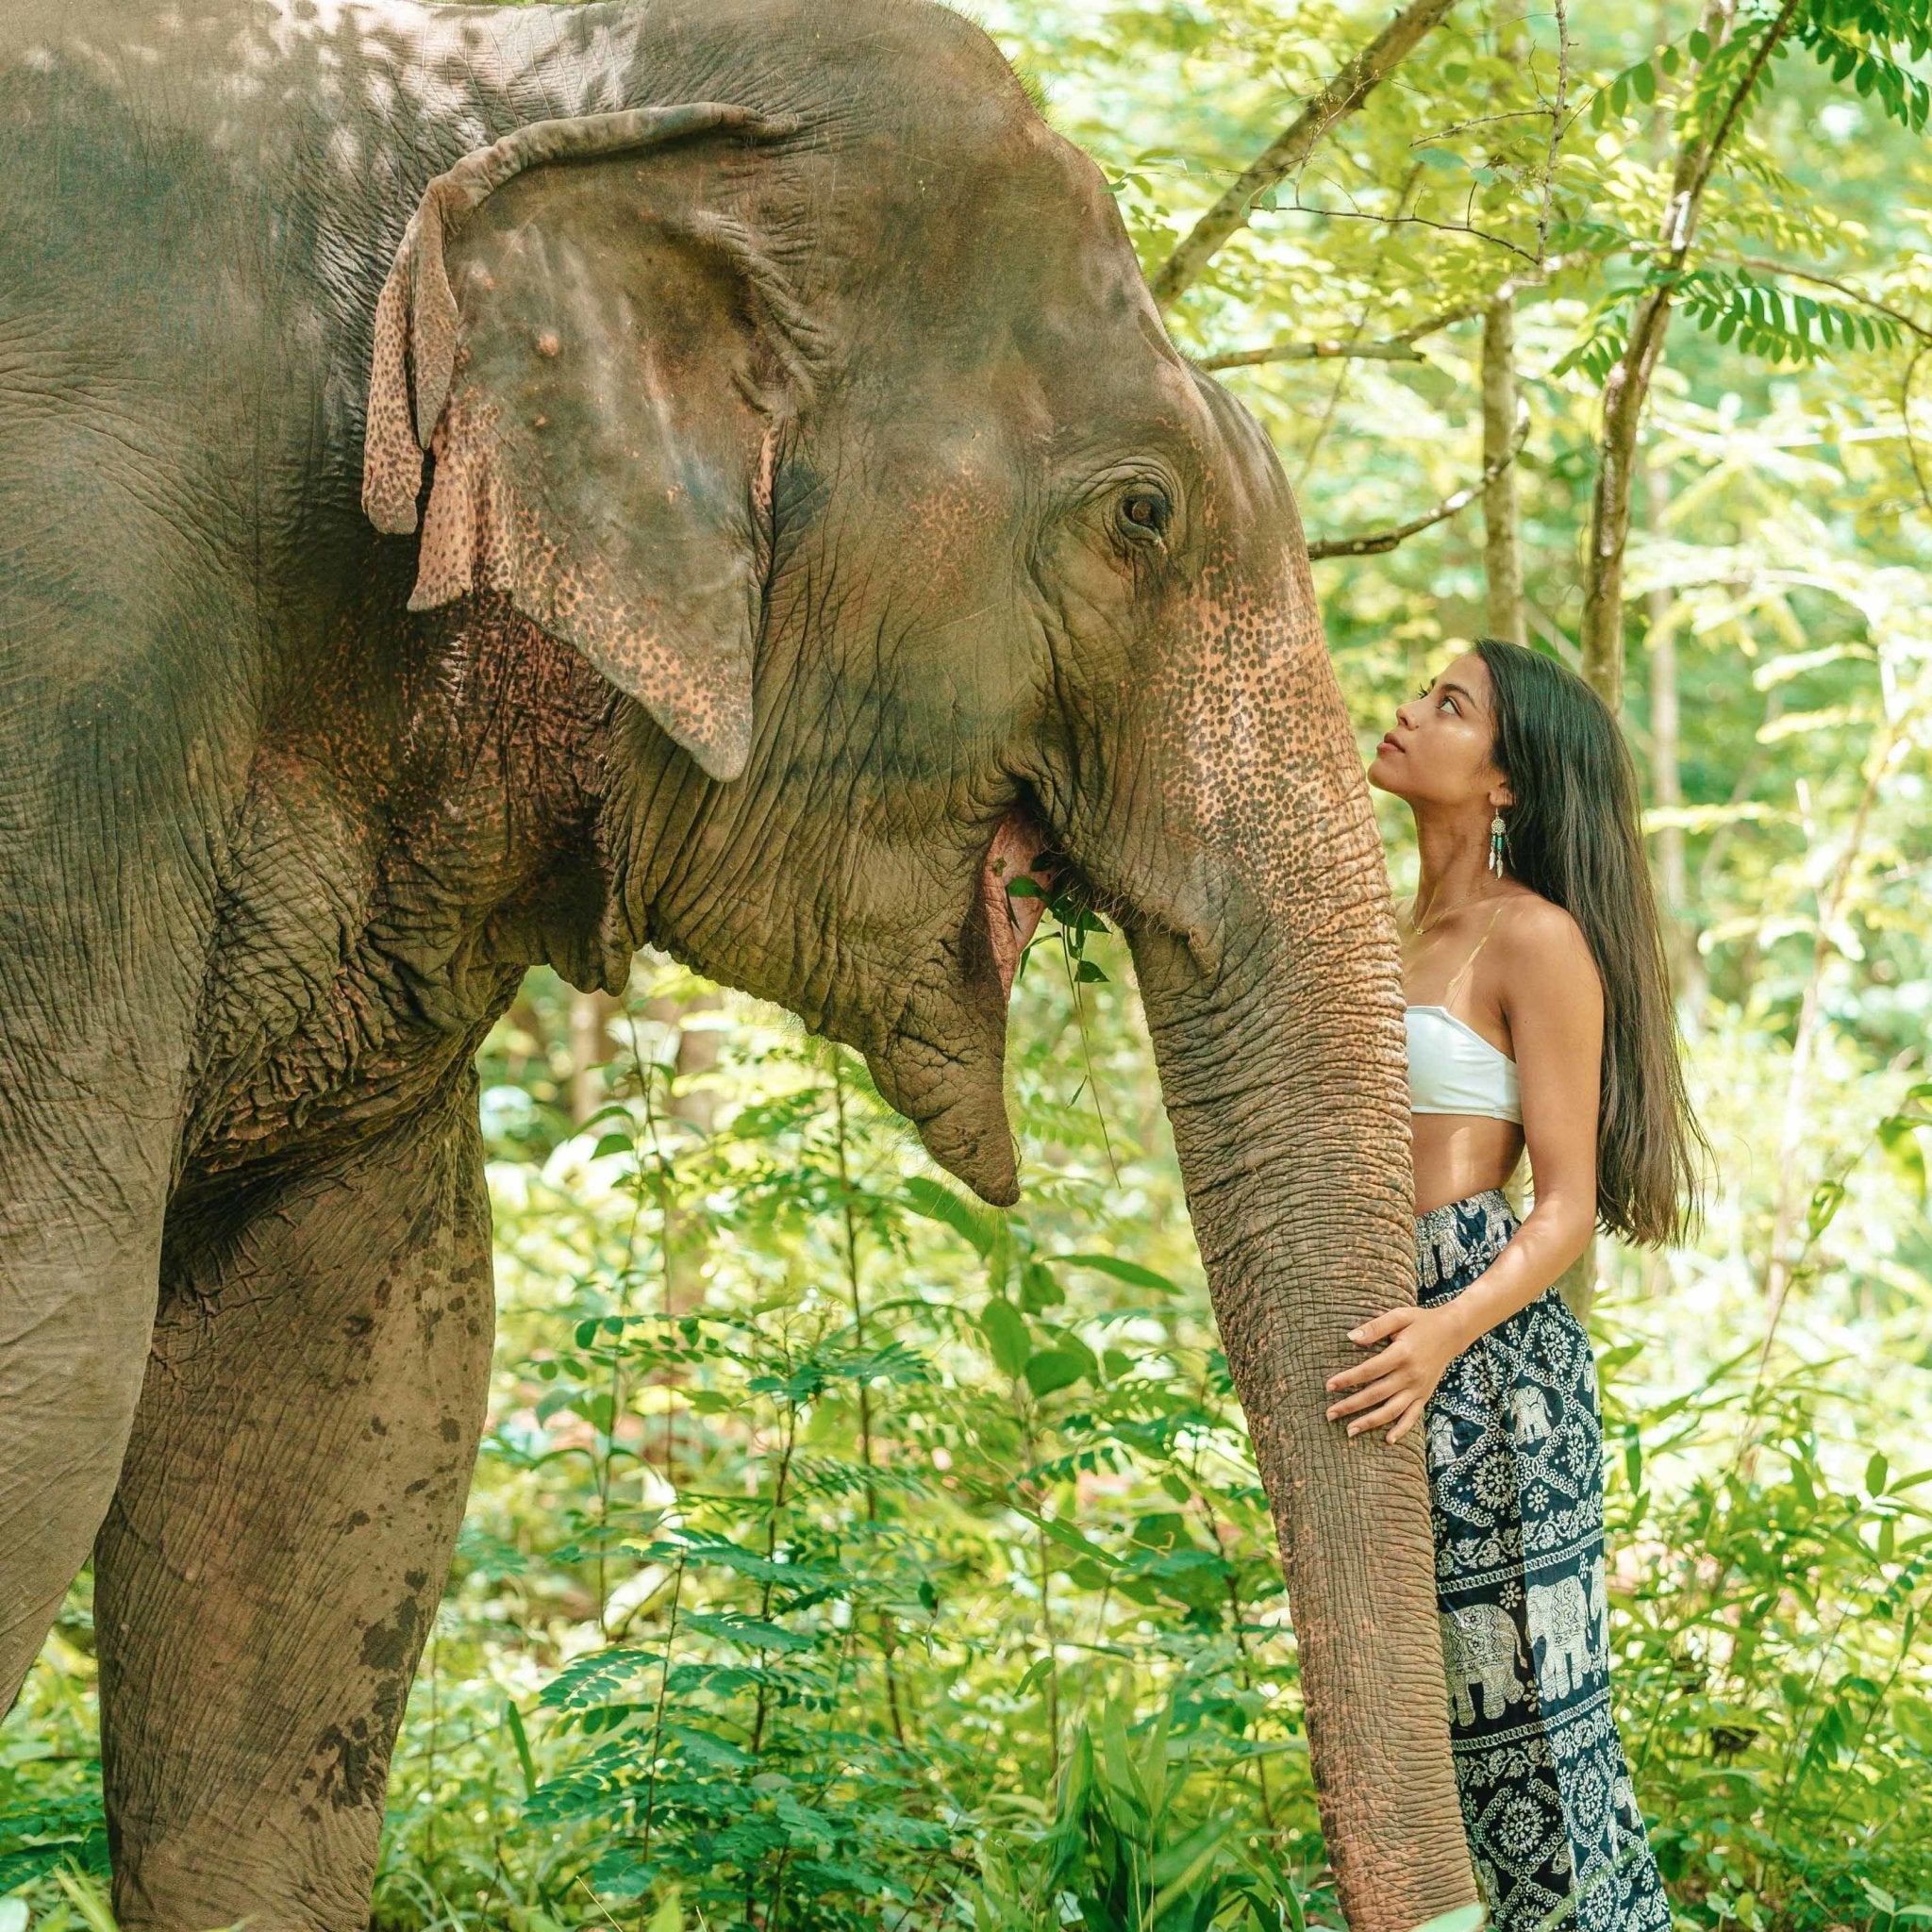 MANDALAY PANTS - Elastic Waists Elepanta Elastic Waist Pants - Buy Today Elephant Pants Jewelry And Bohemian Clothes Handmade In Thailand Help To Save The Elephants FairTrade And Vegan